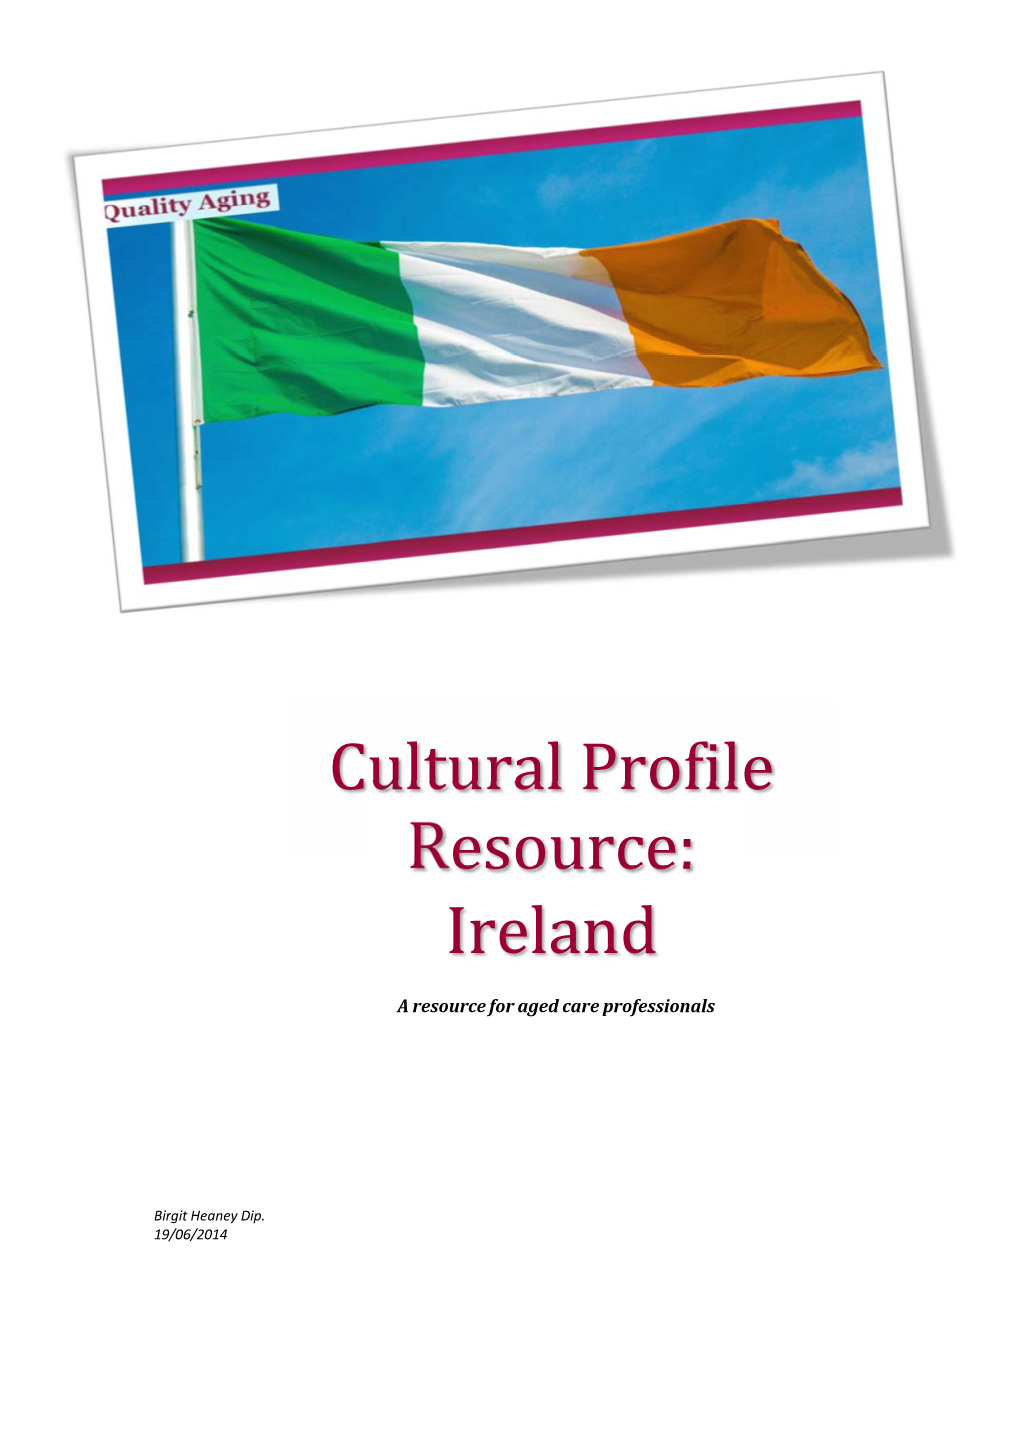 Cultural Profile Resource: Ireland